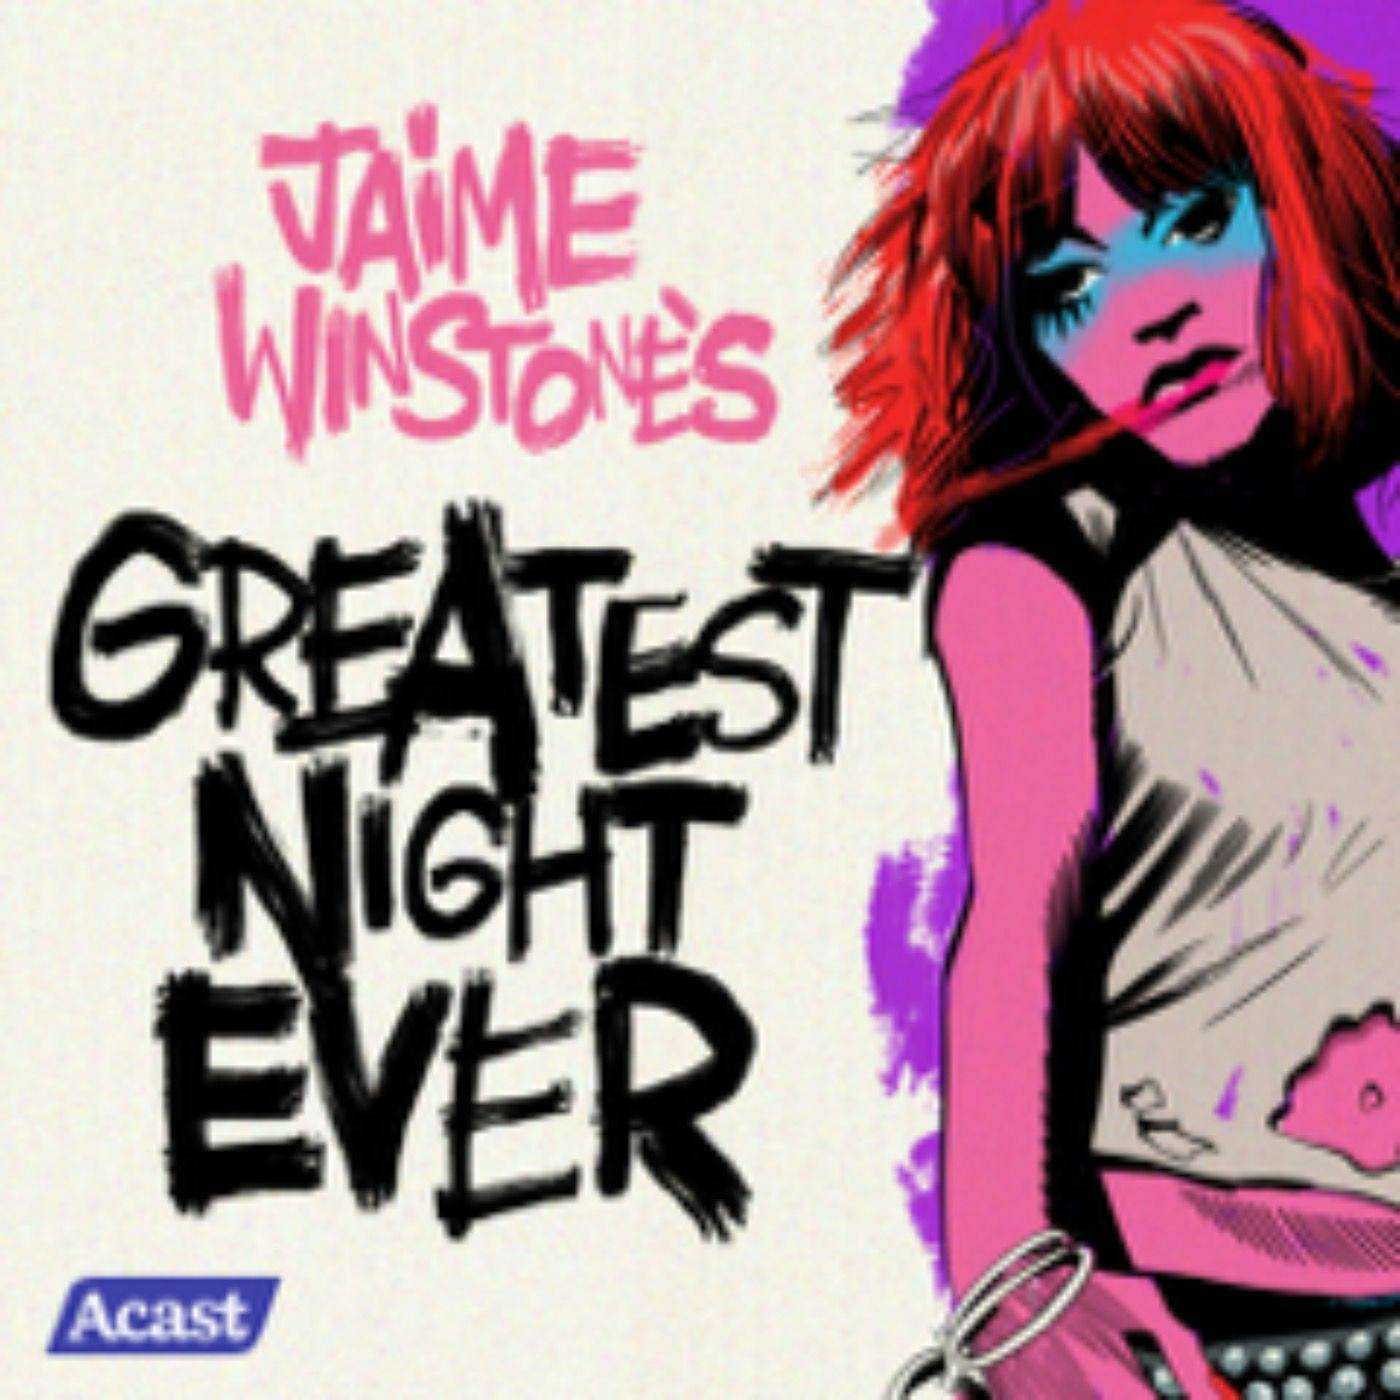 Jaime Winstone’s Greatest Night Ever